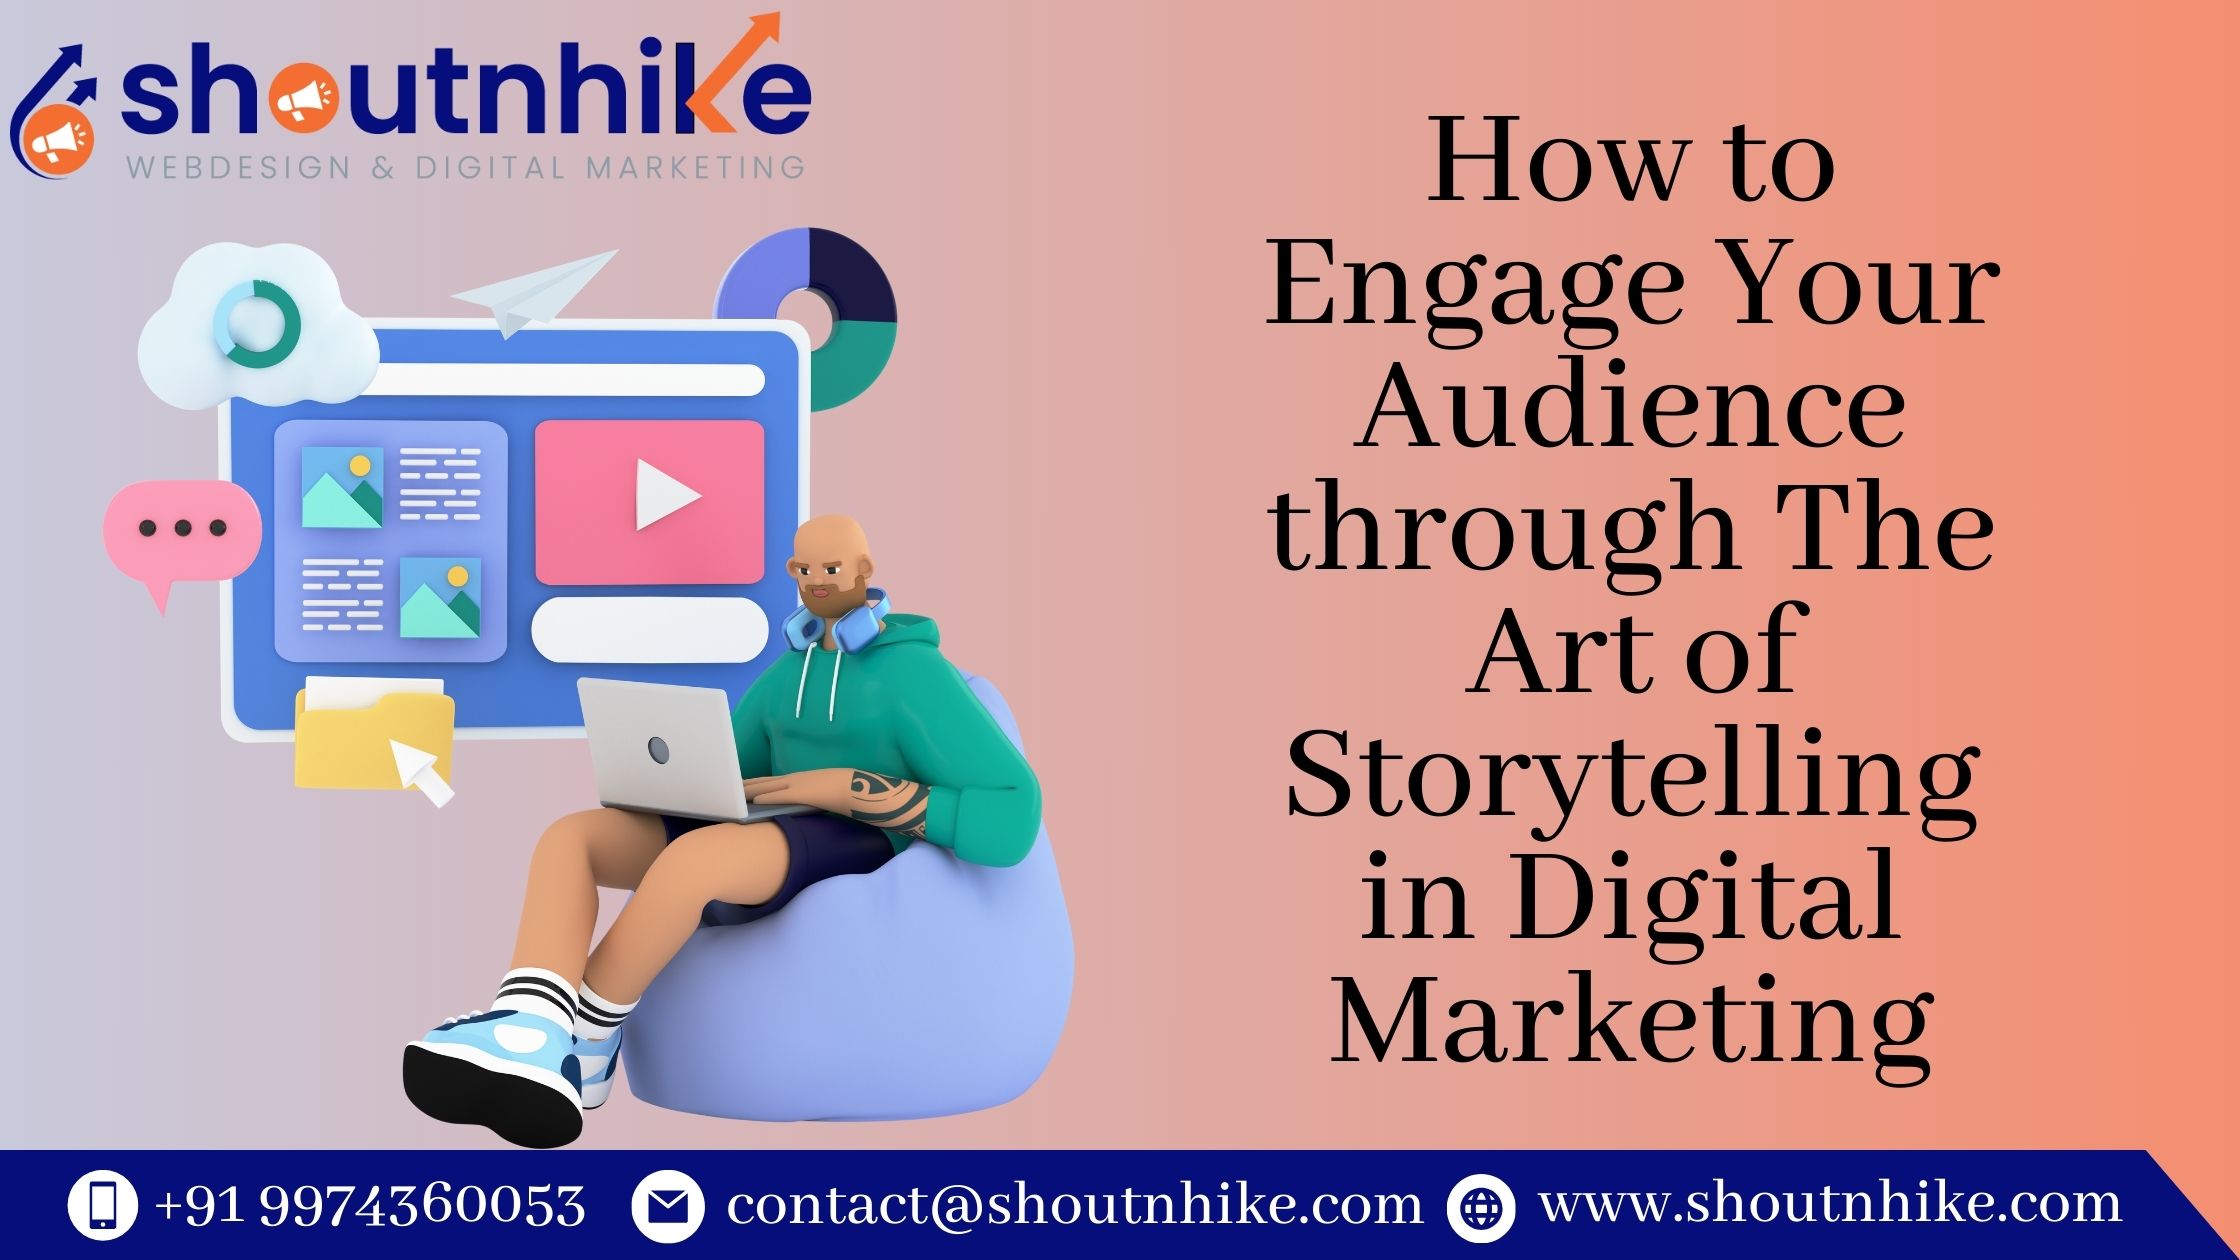 The Art of Storytelling in Digital Marketing